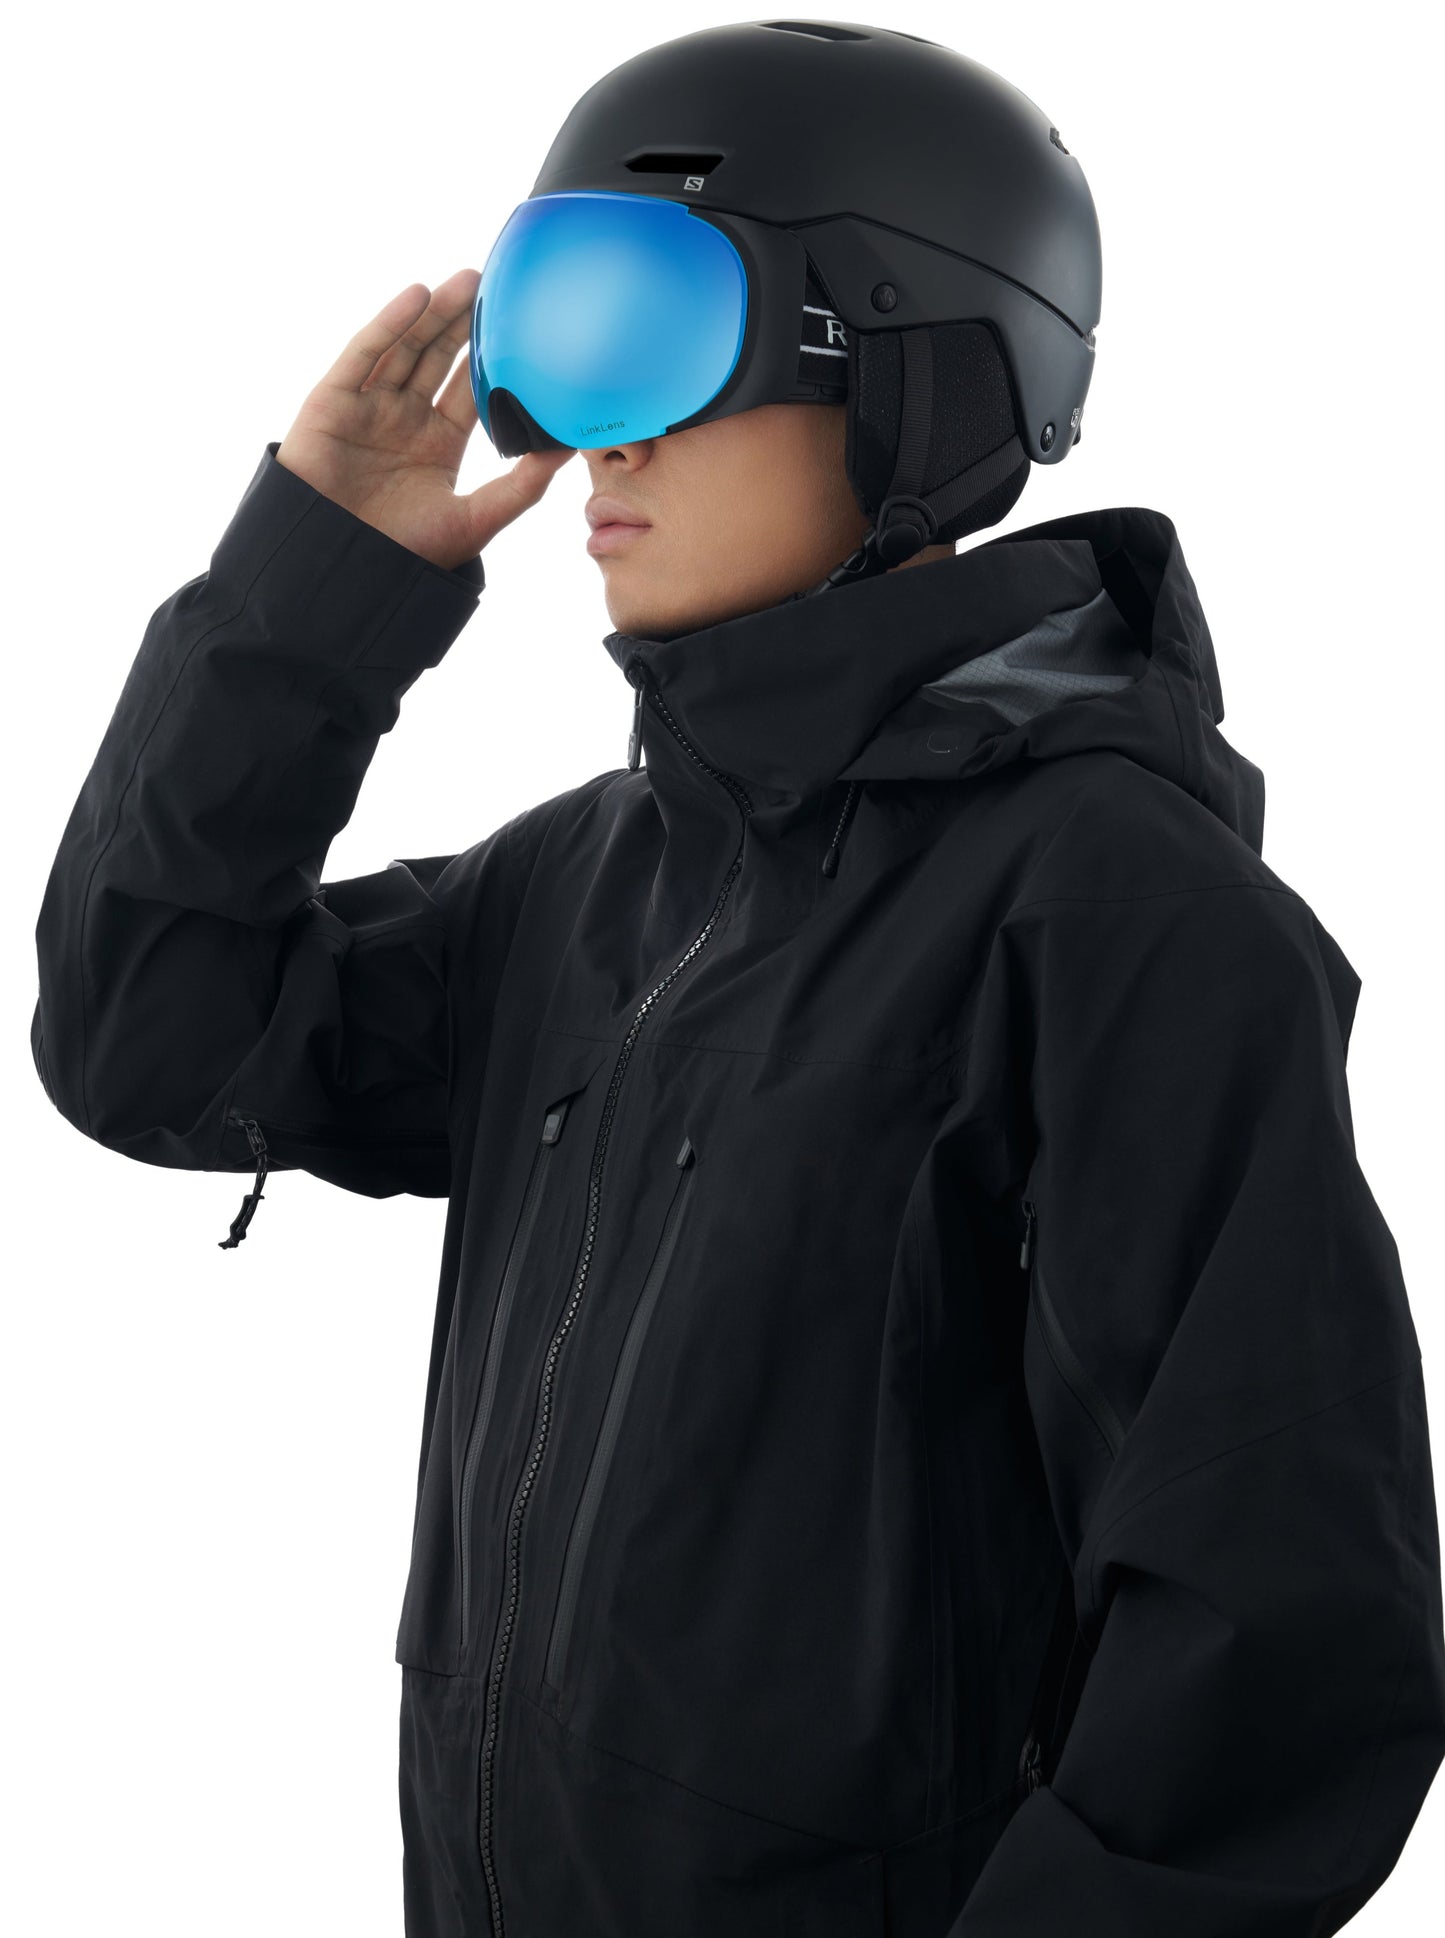 LinkLens Pro 2 Audio Snow Goggles